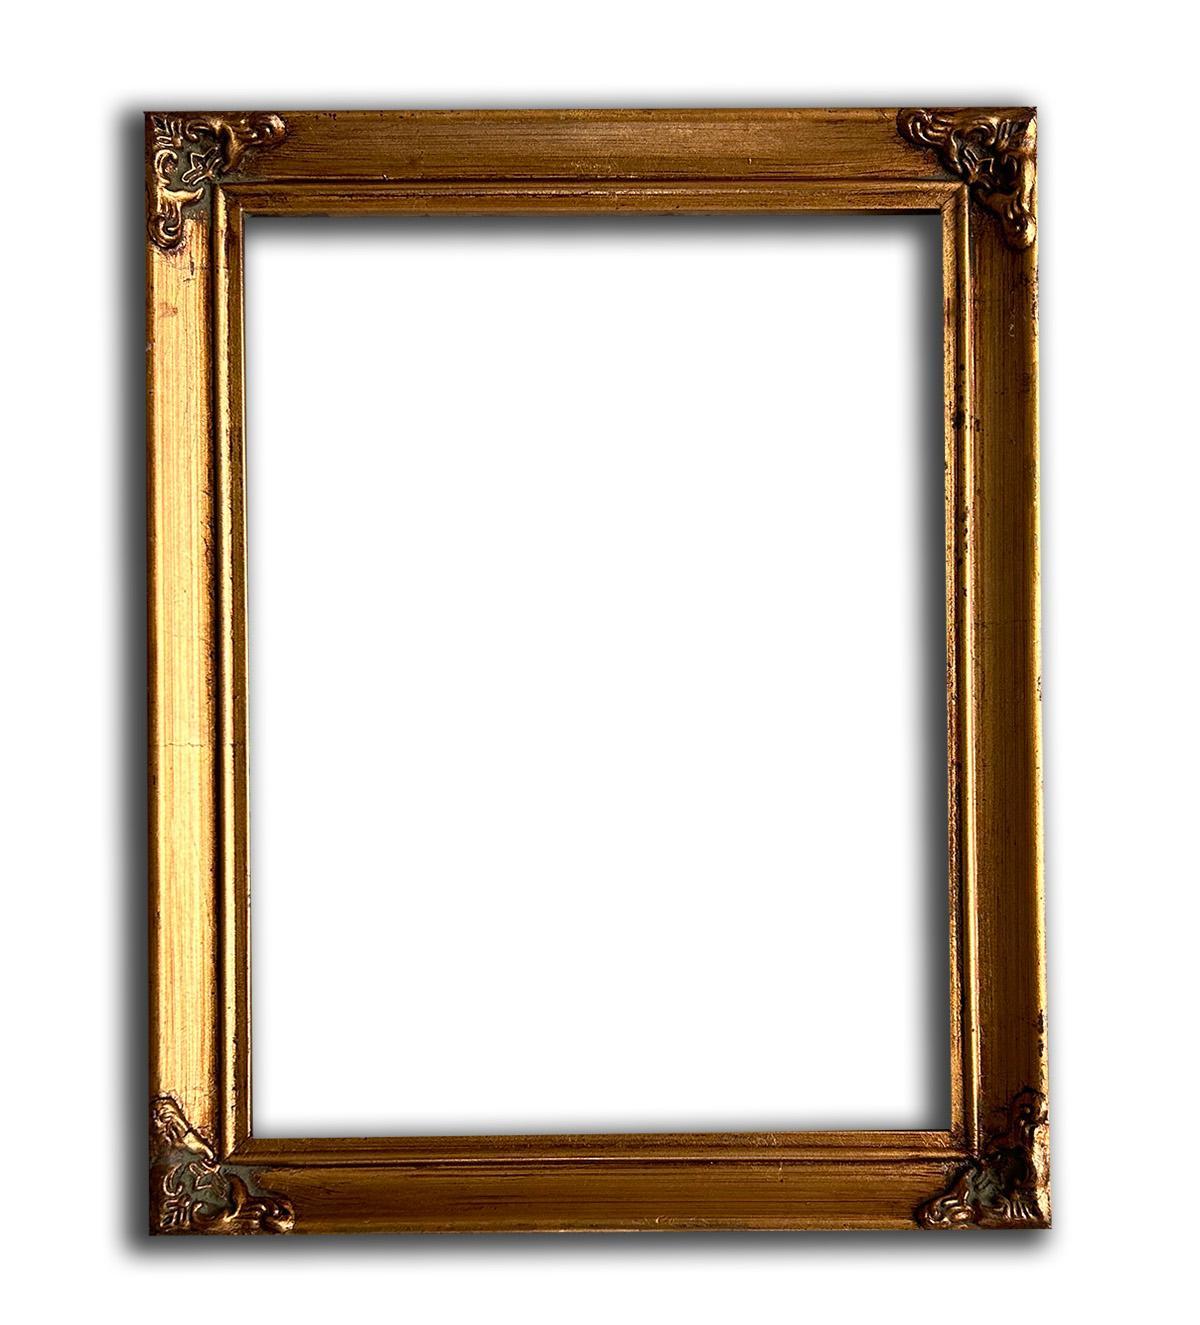 16x21 cm or 6x8 ins photo frame